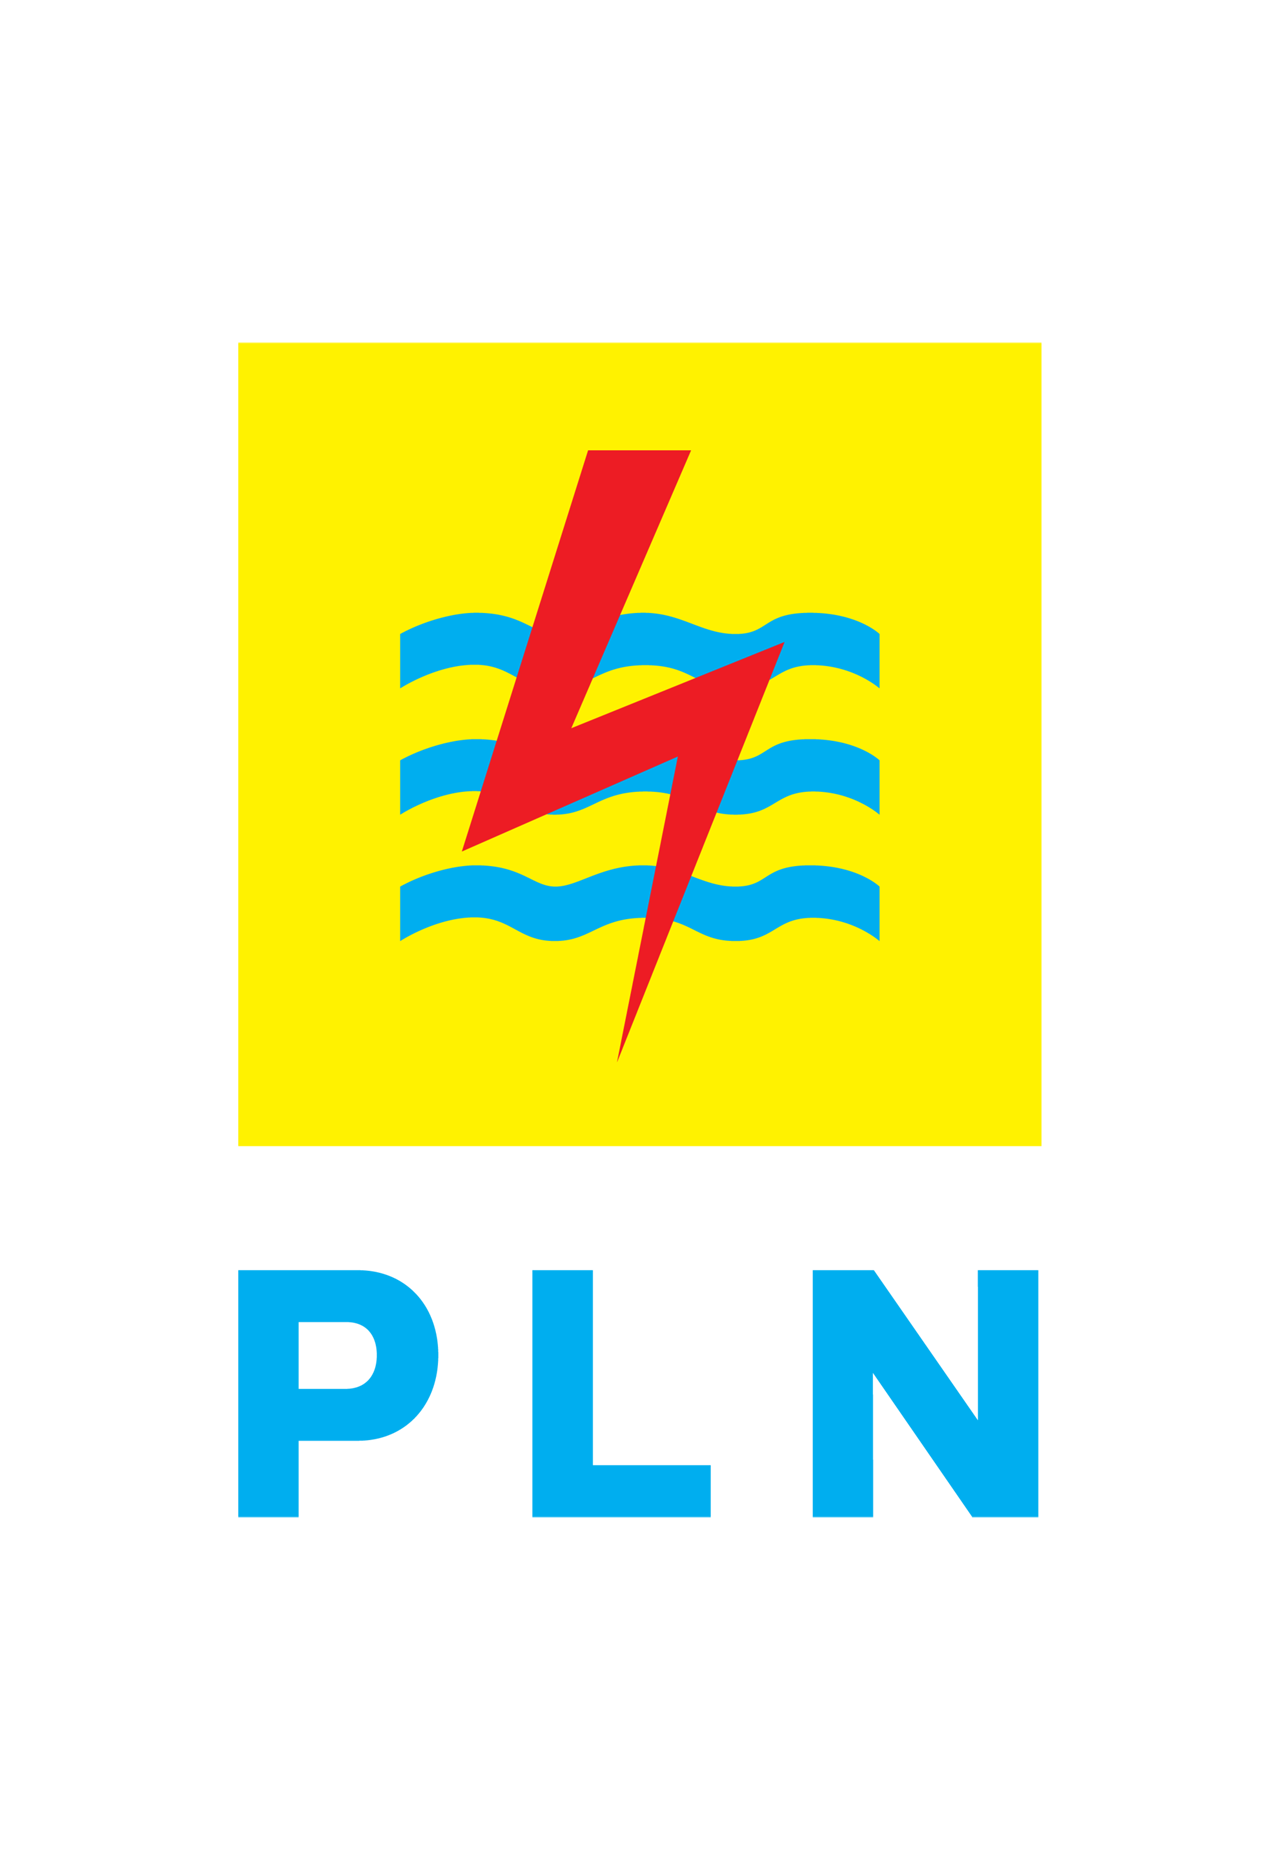 PT PLN (Persero)